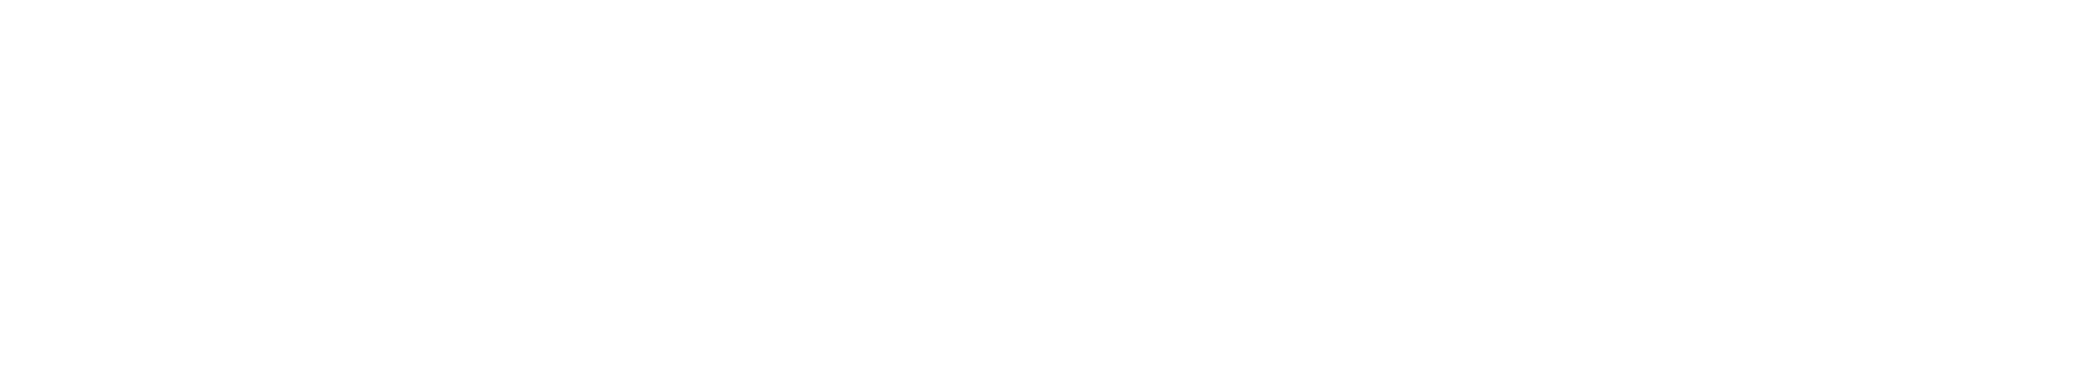 Novatron Scientific logo